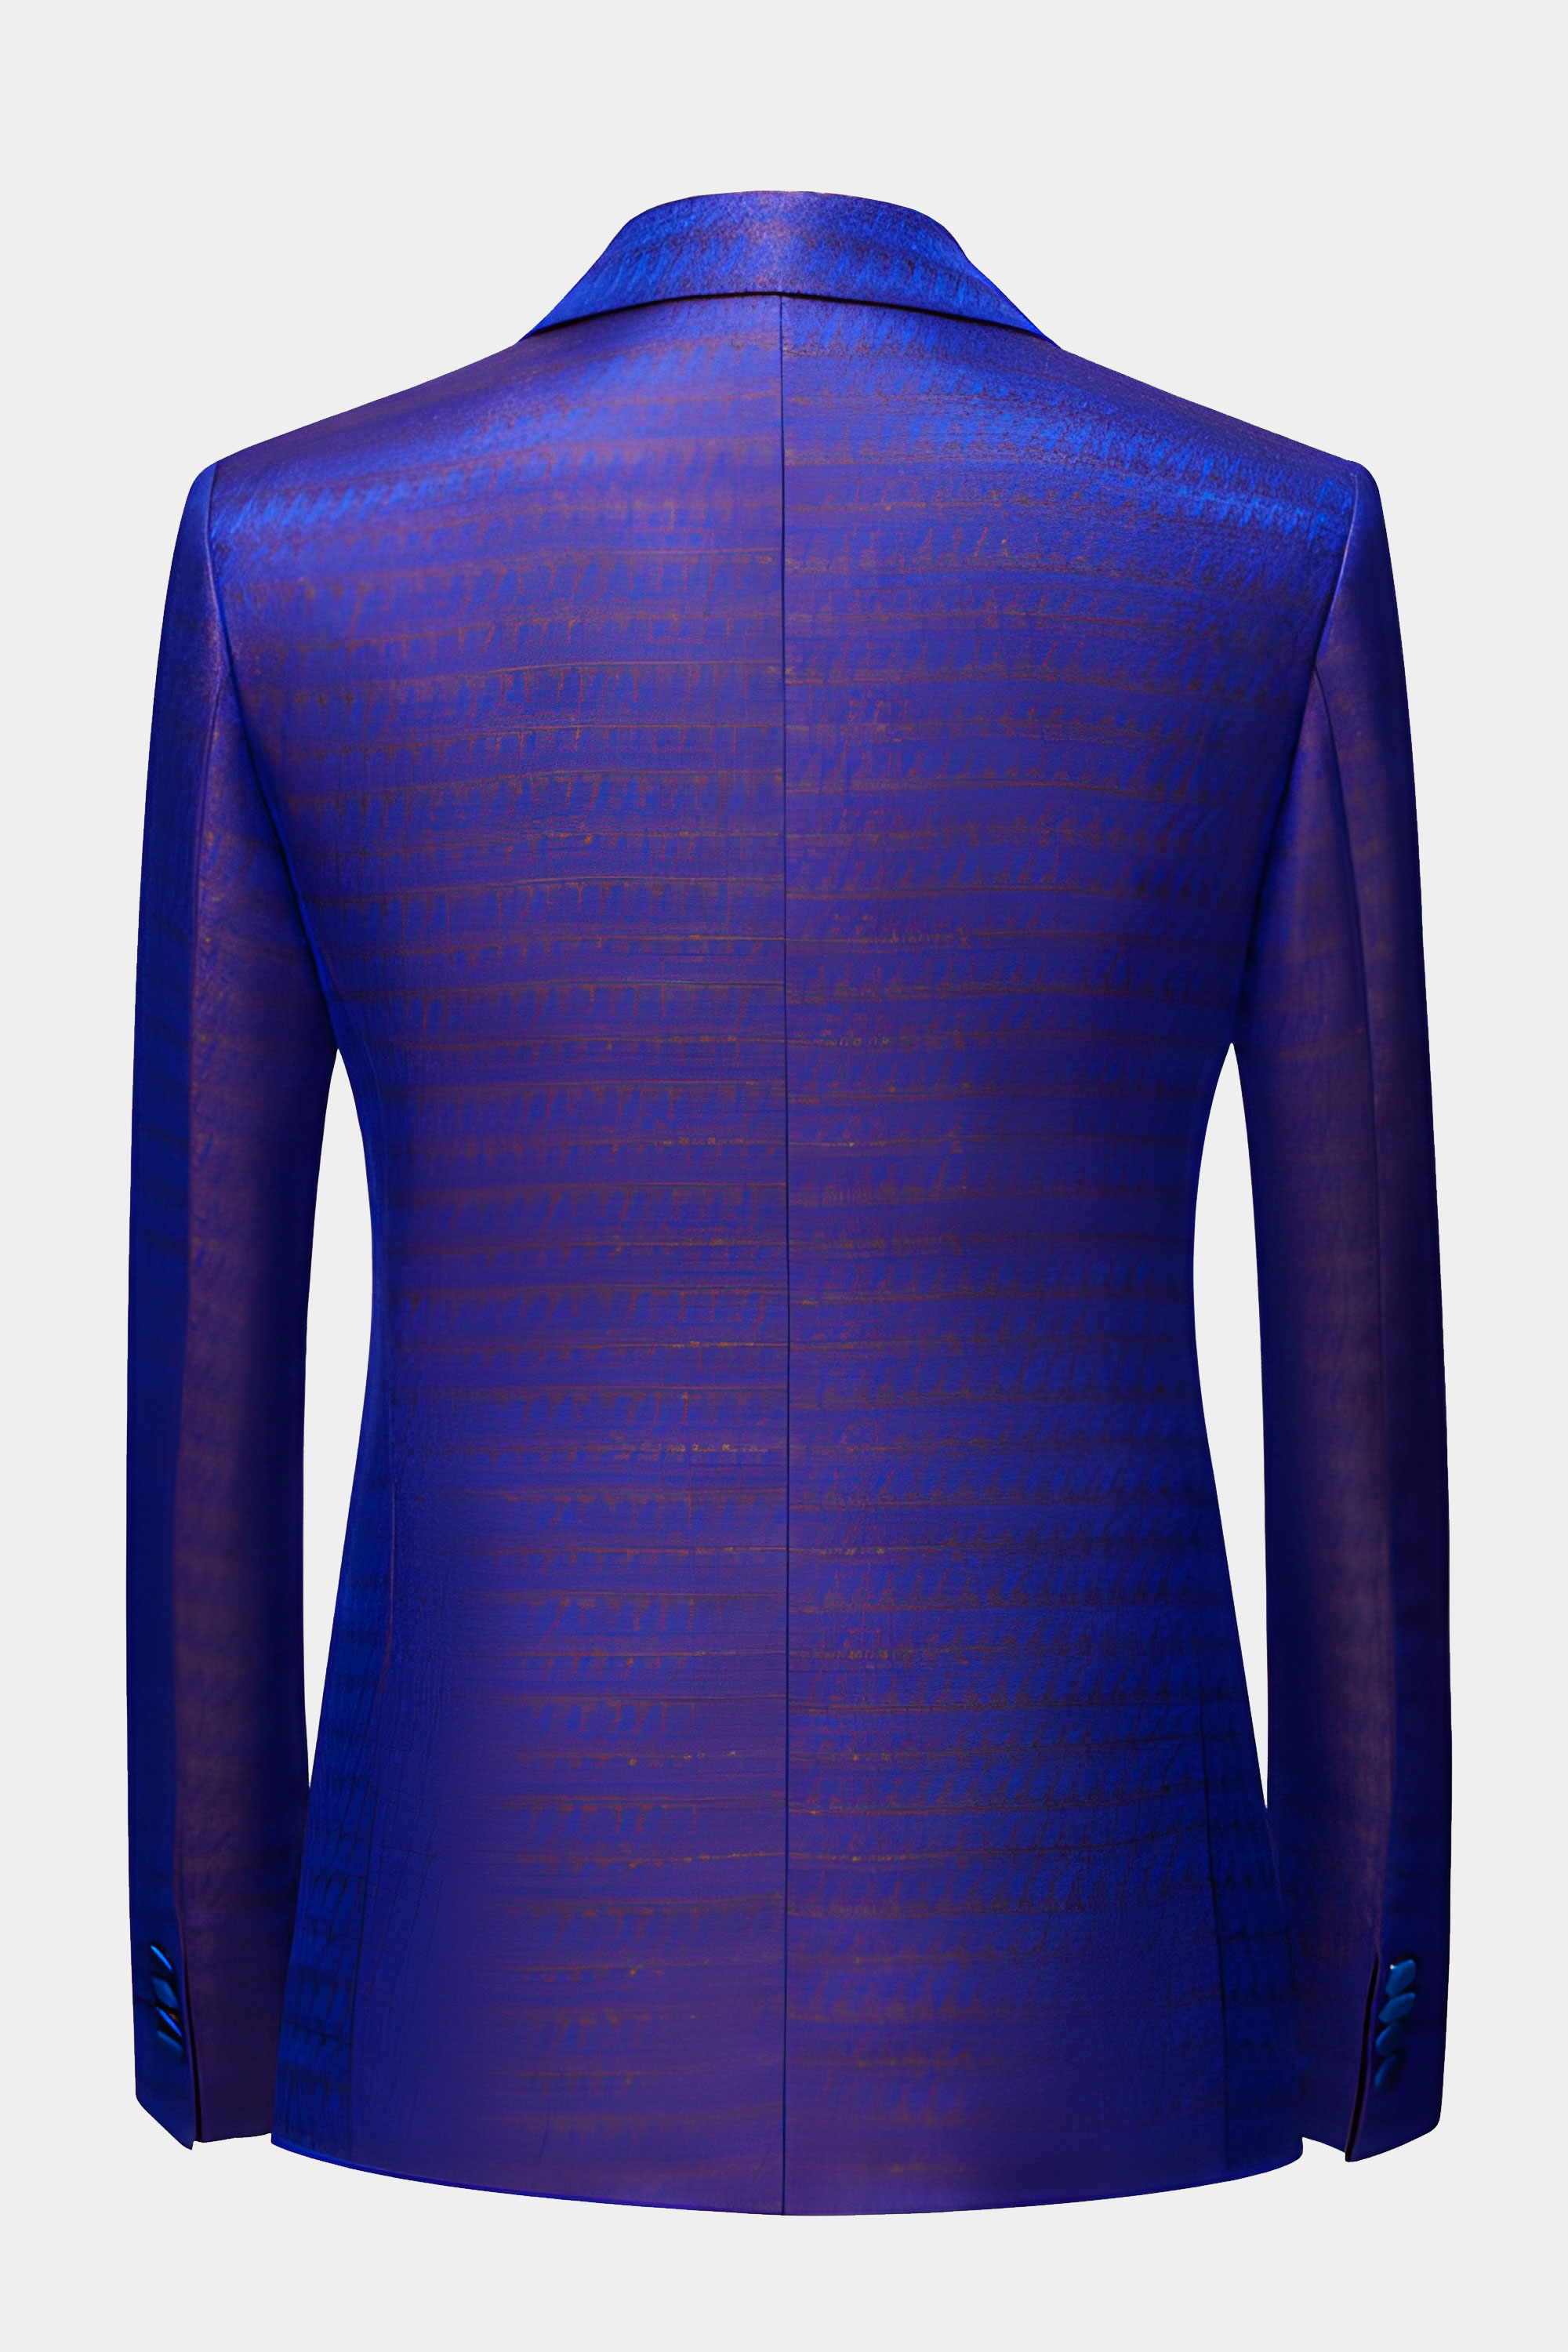 Sapphire-Blue-Tuxedo-Jacket-from-Gentlemansguru.com